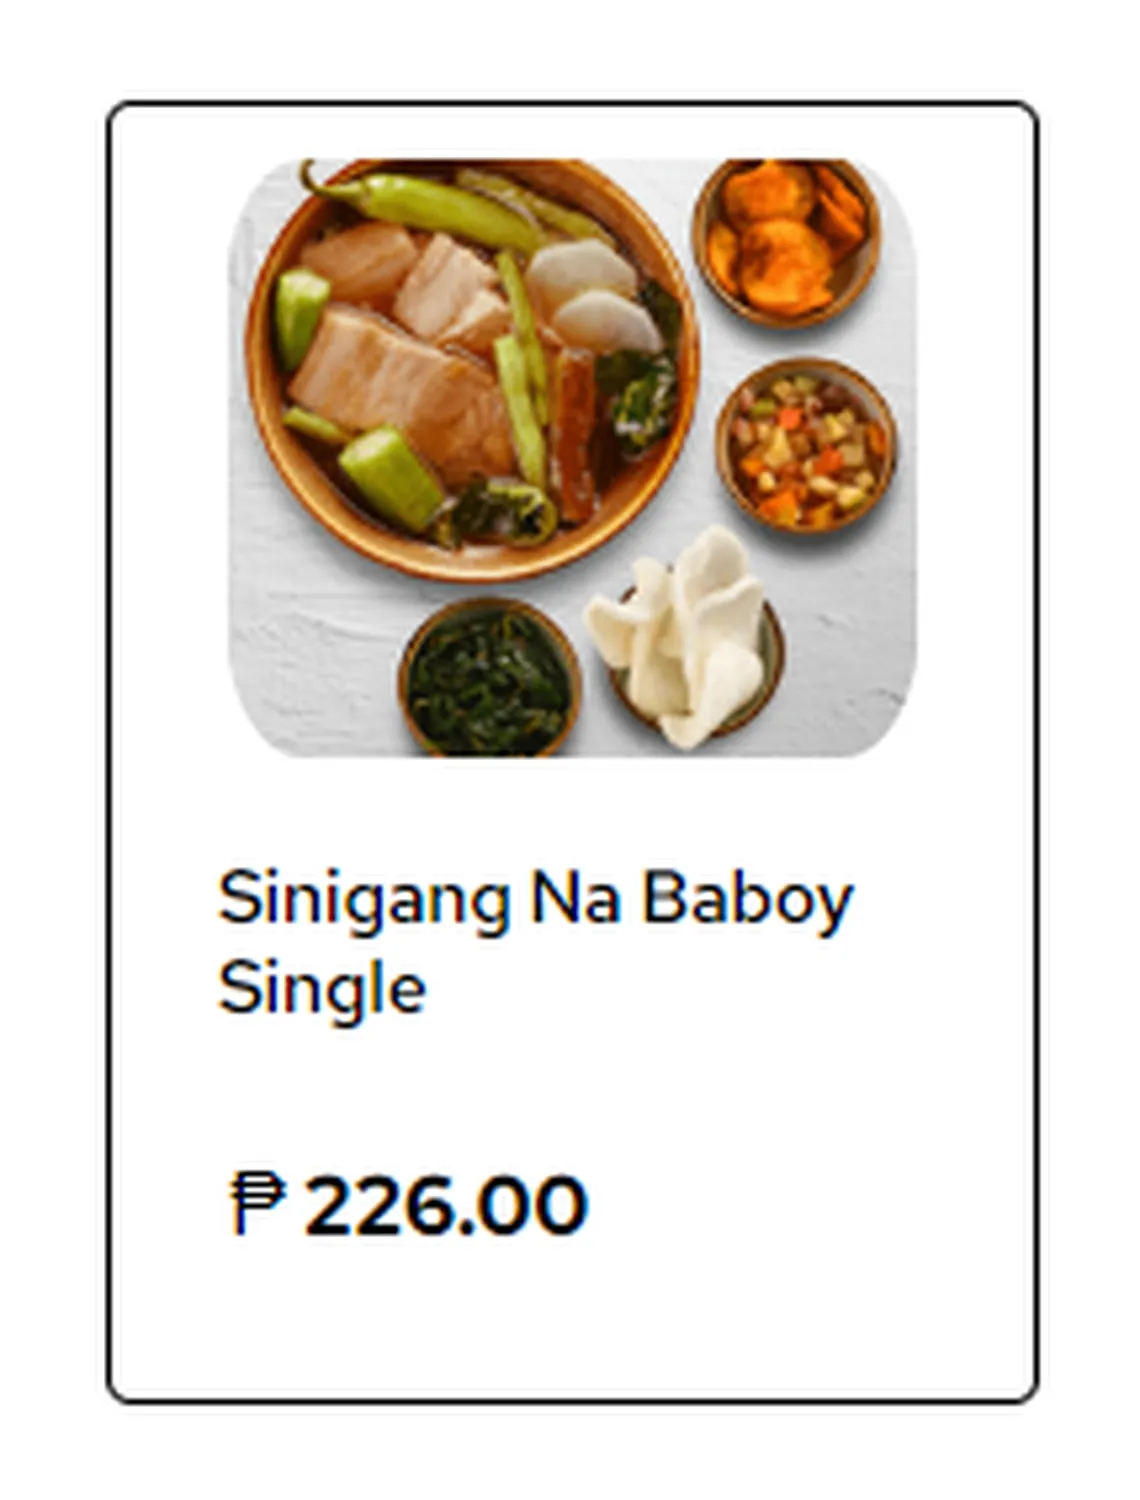 kuya j menu philippine singles sets pork good for you